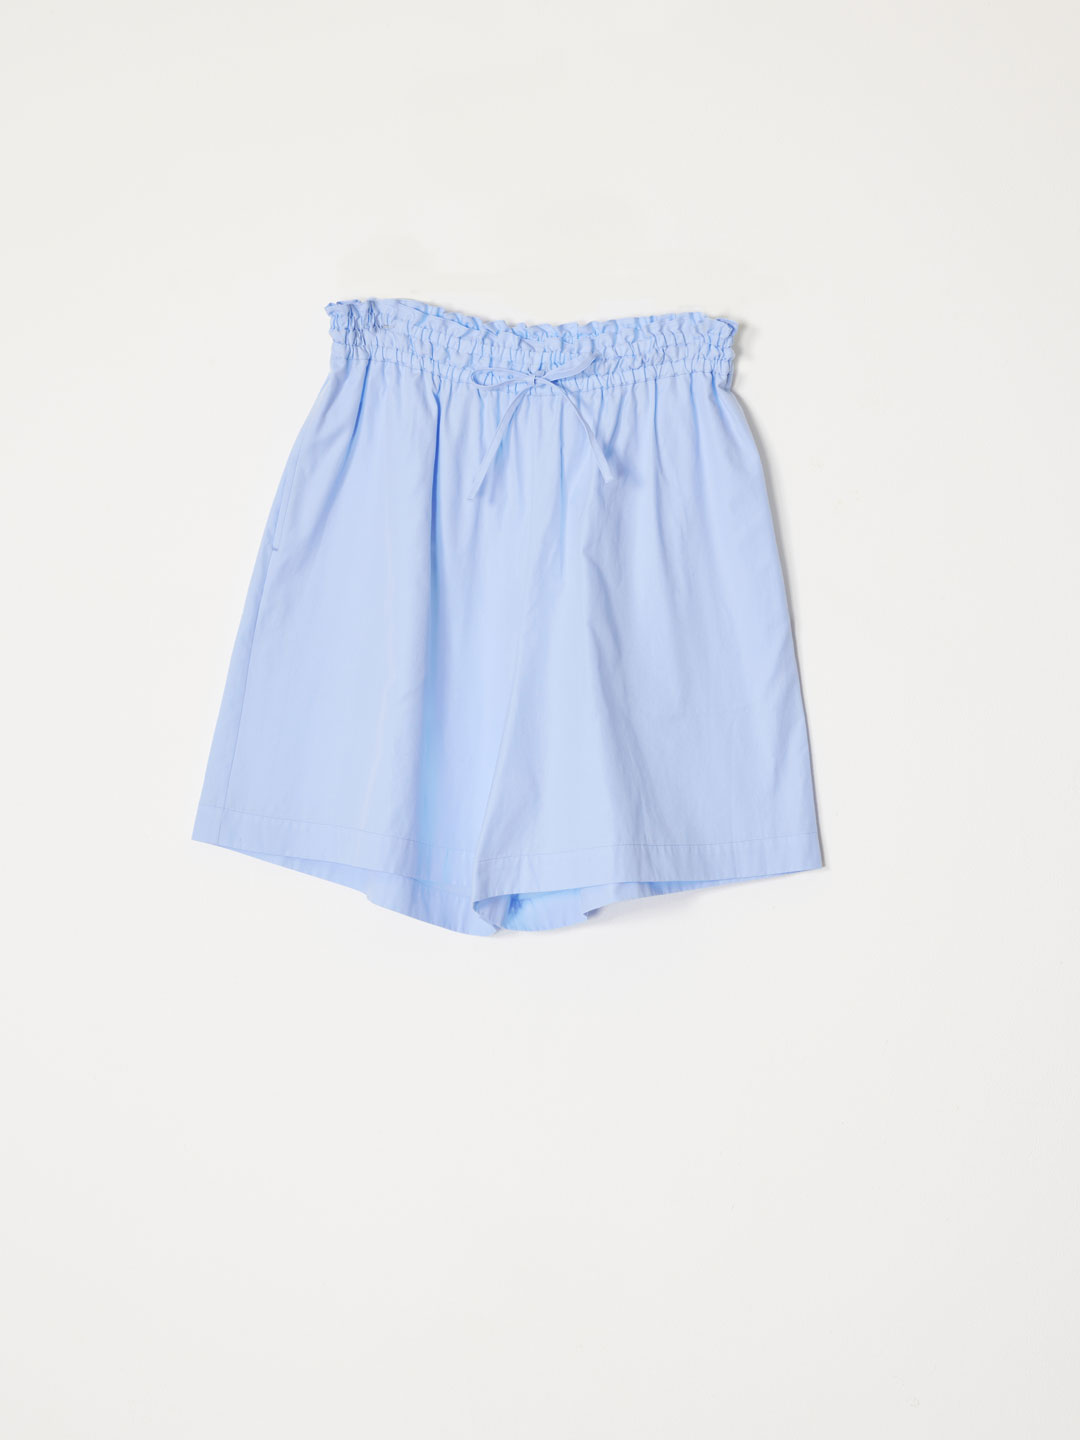 Cotton OX Pajama Shorts - Sax